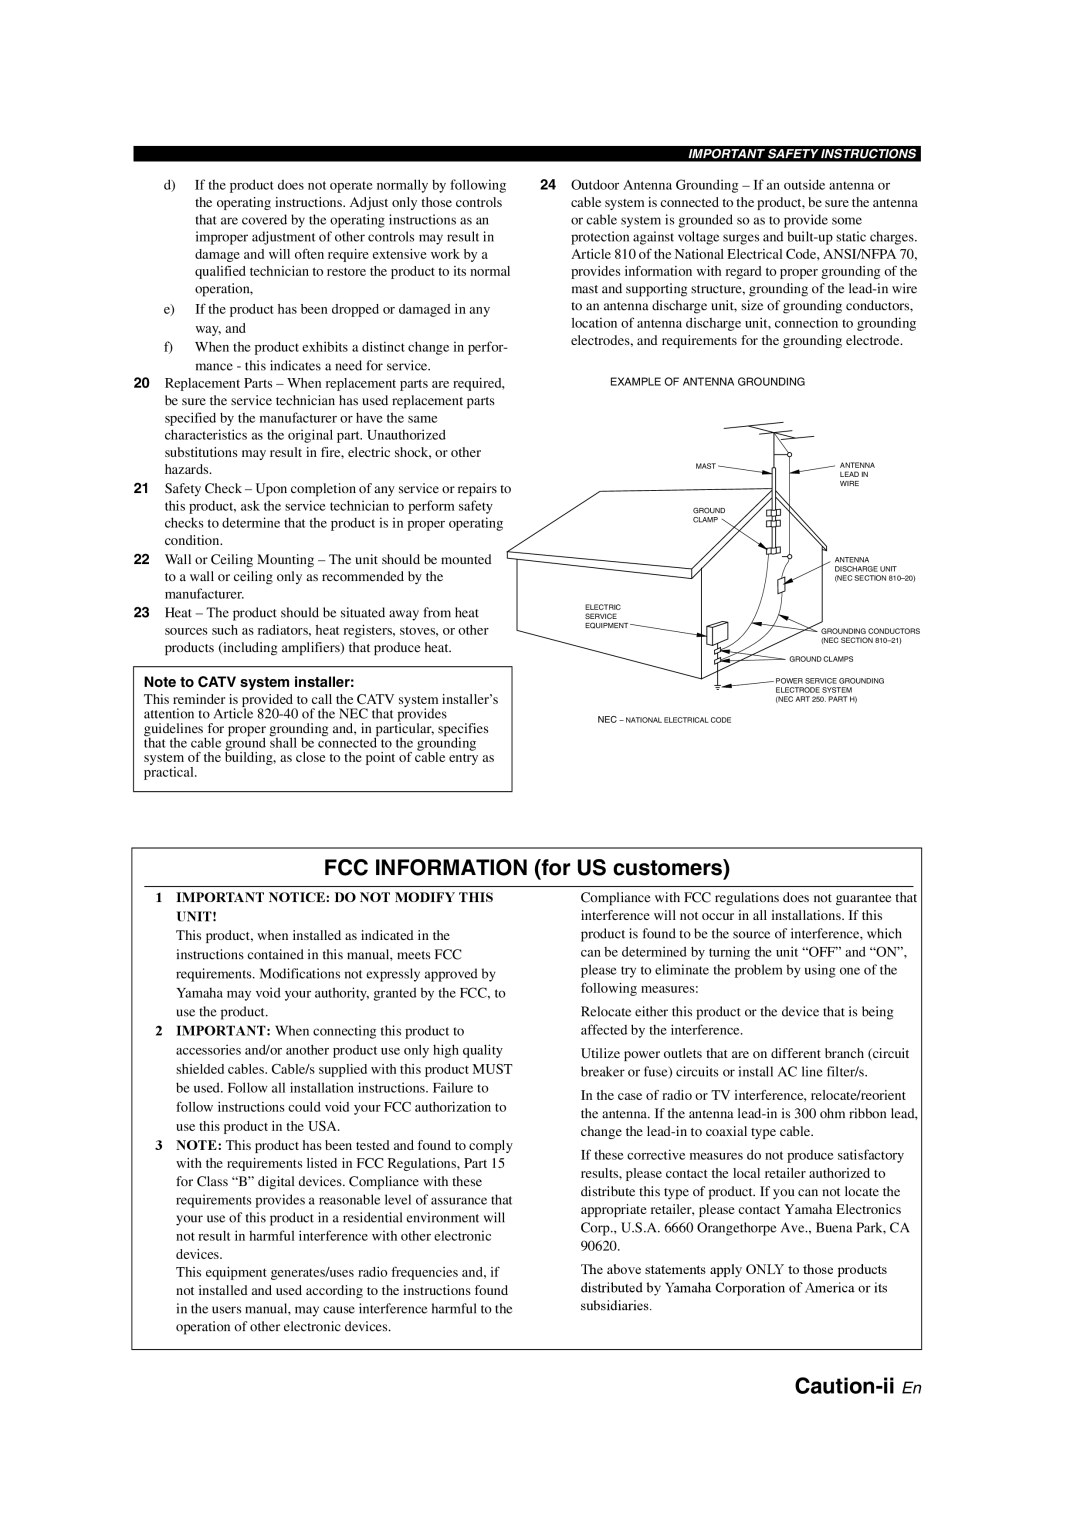 Yamaha HTR-6140 owner manual FCC INFORMATION for US customers, Caution-ii En, Note to CATV system installer 